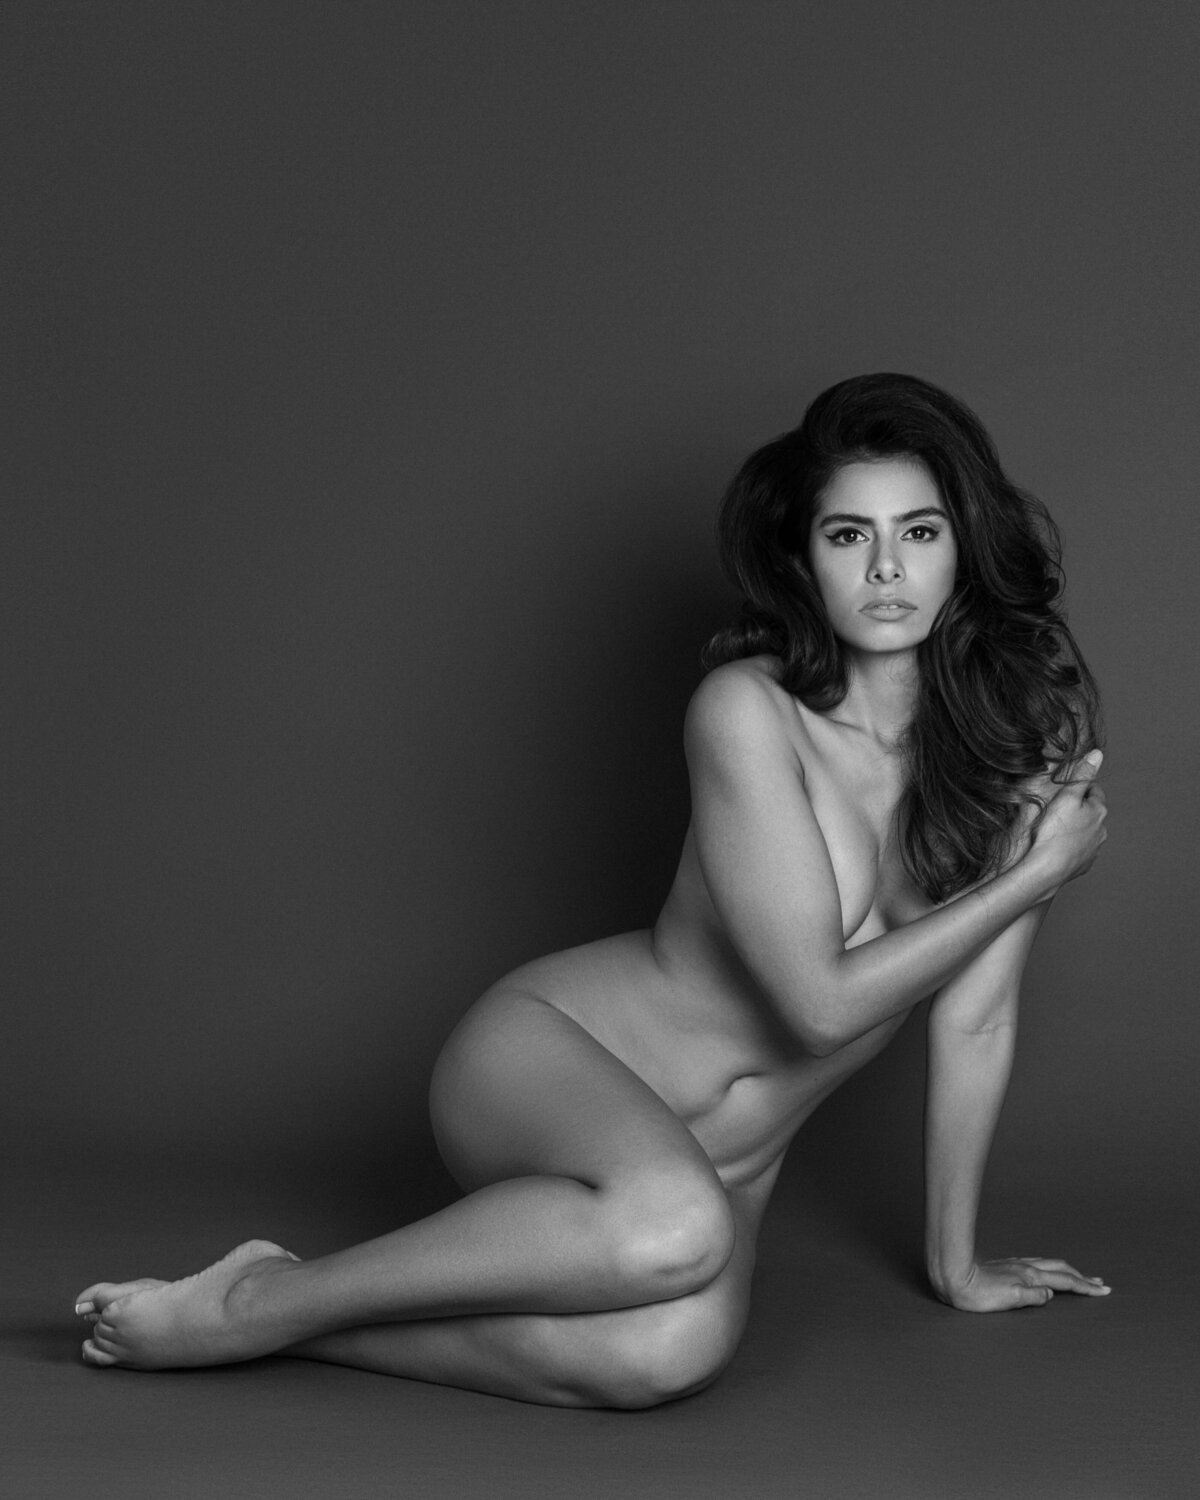 Beautiful black and white artistic nude portrait in studio